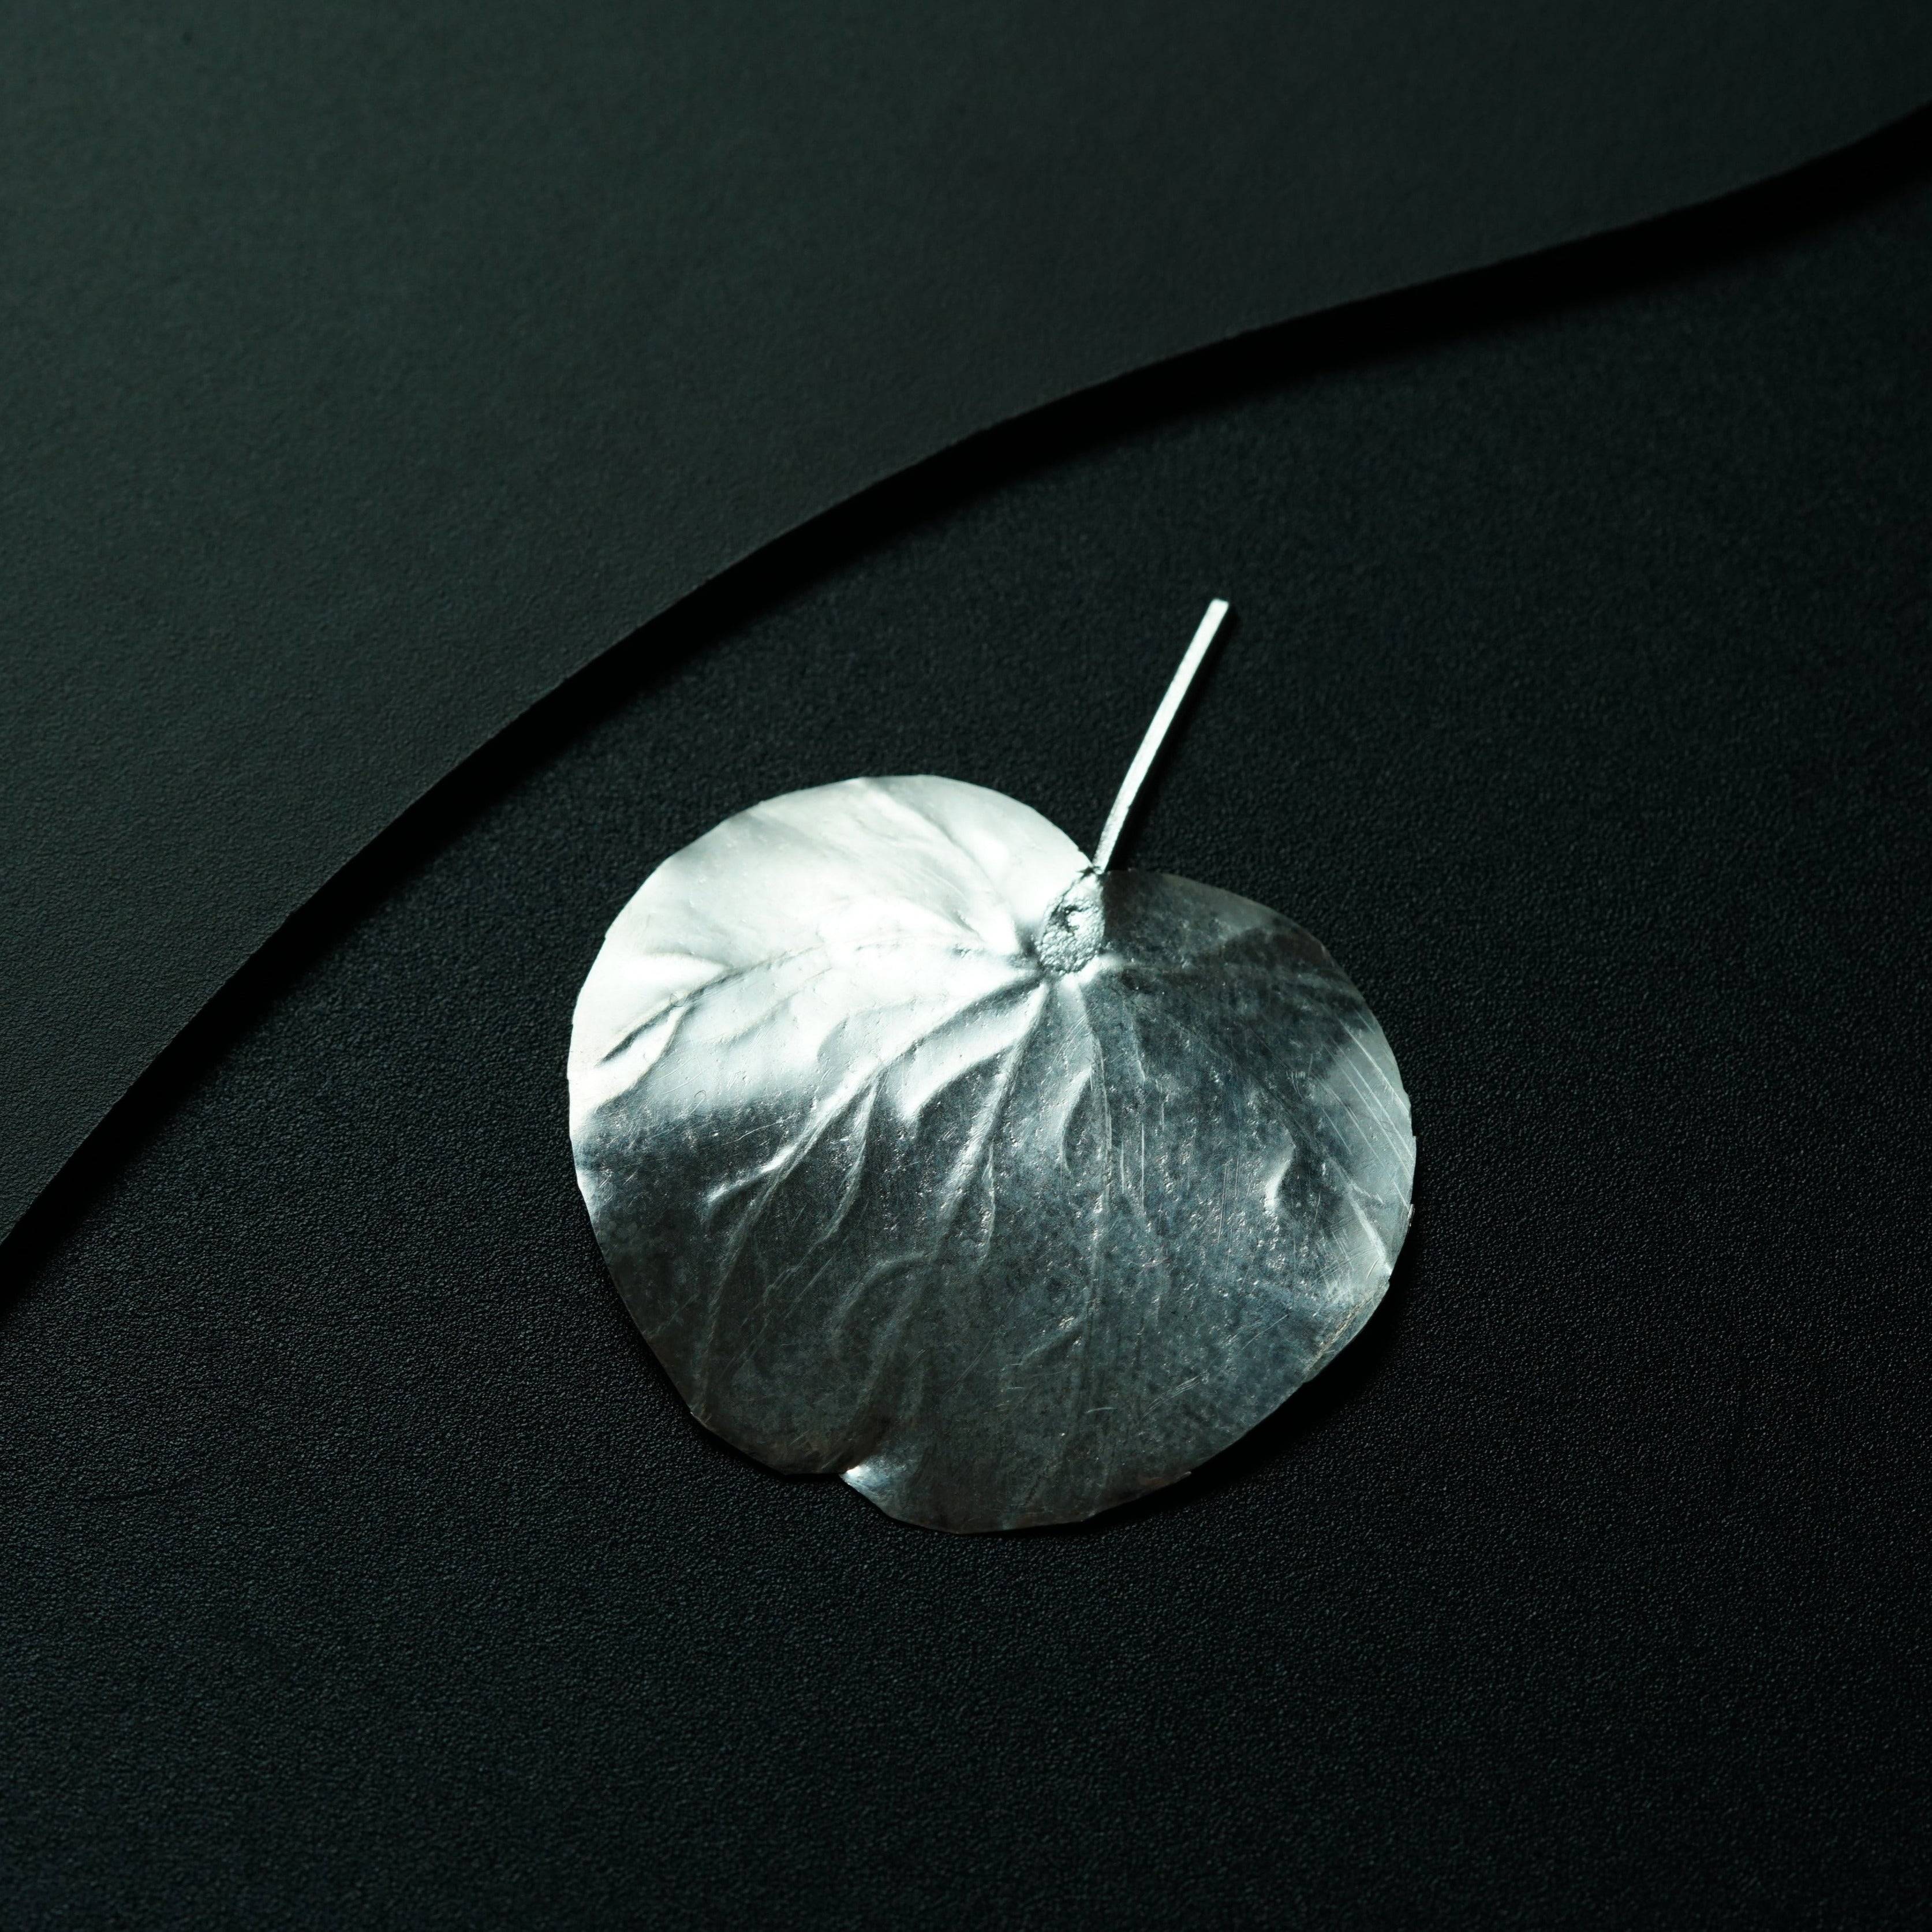 a silver leaf on a black surface